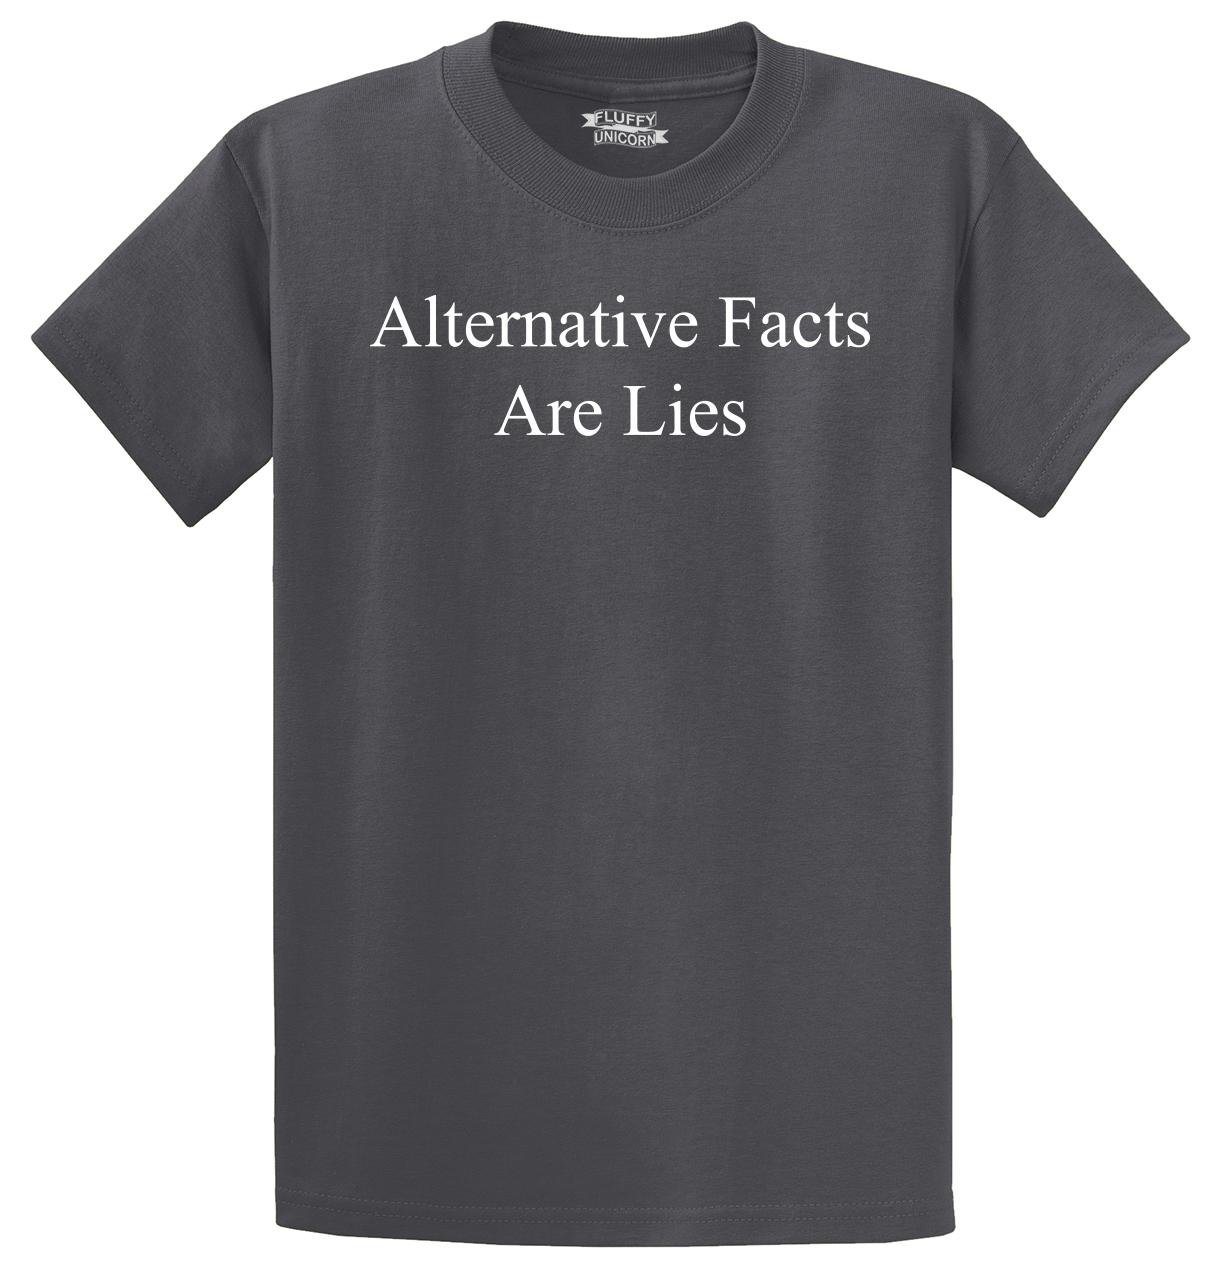 Alternative Facts Are Lies T Shirt Anti Trump Democrat Protest Tee Shirt S-5XL